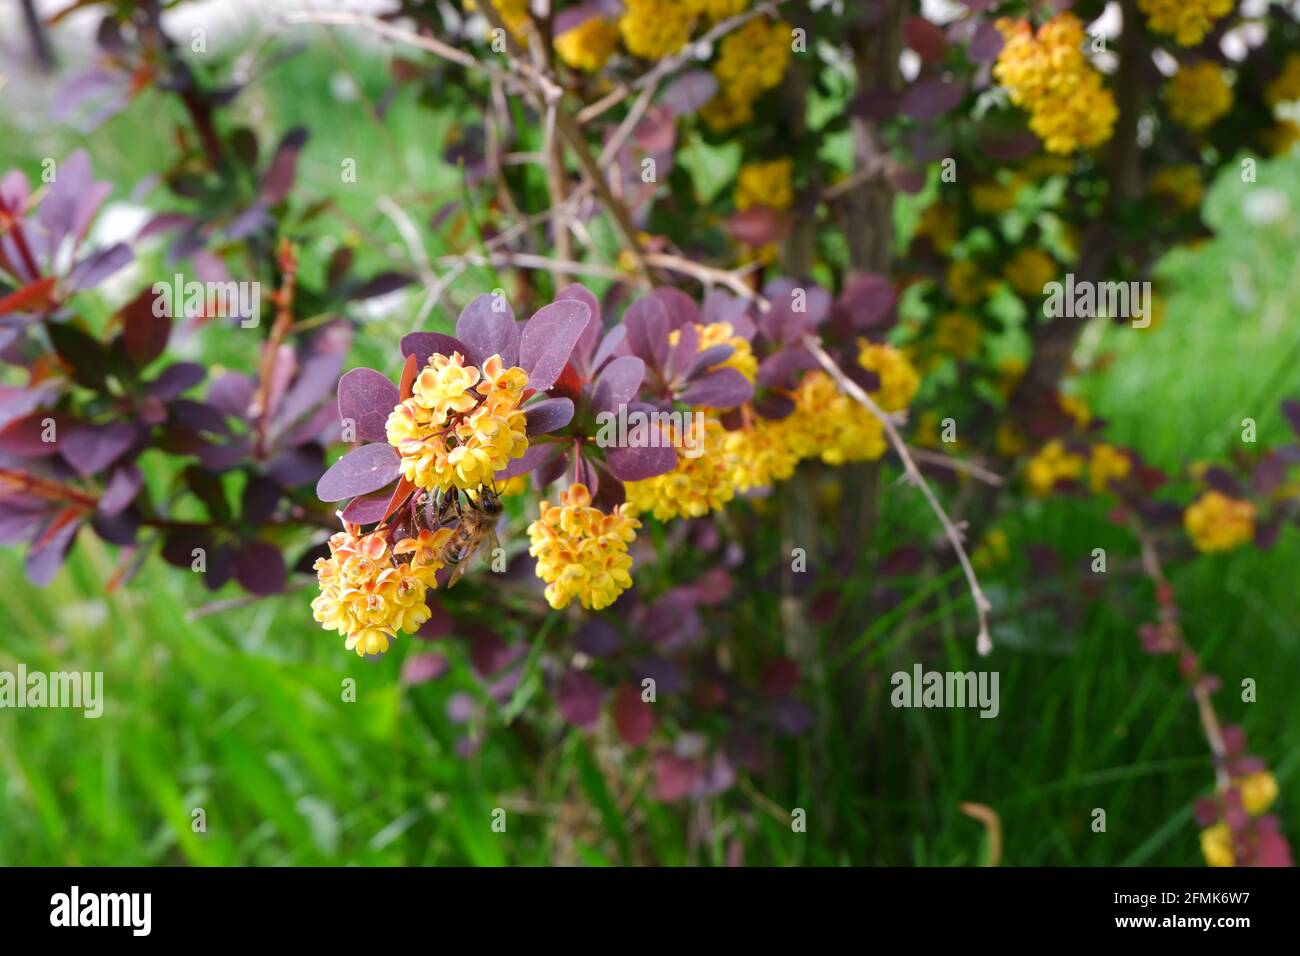 Berberis thunbergii - Japanische Berberbeere - mit kleinen gelben Blüten und Honigbiene darauf Stockfoto